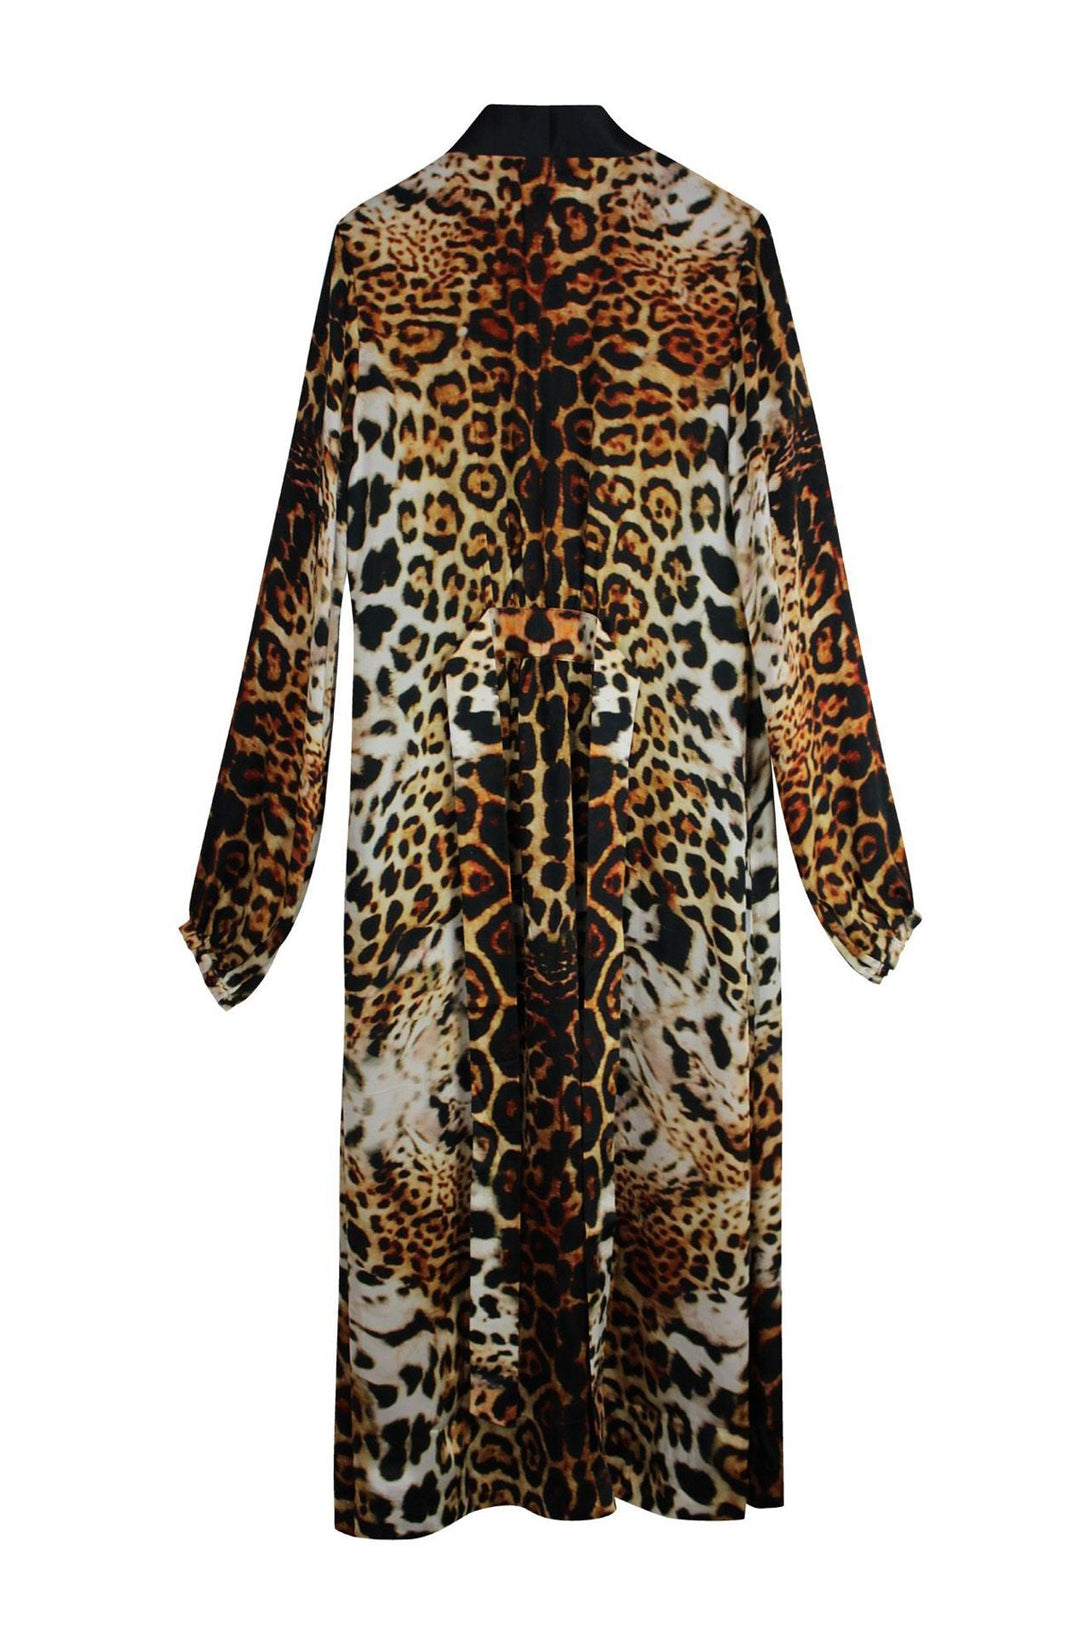 "leopard robes" "silk kimono robe womens" "long silk kimono" "Shahida Parides" "long kimono silk robe" 